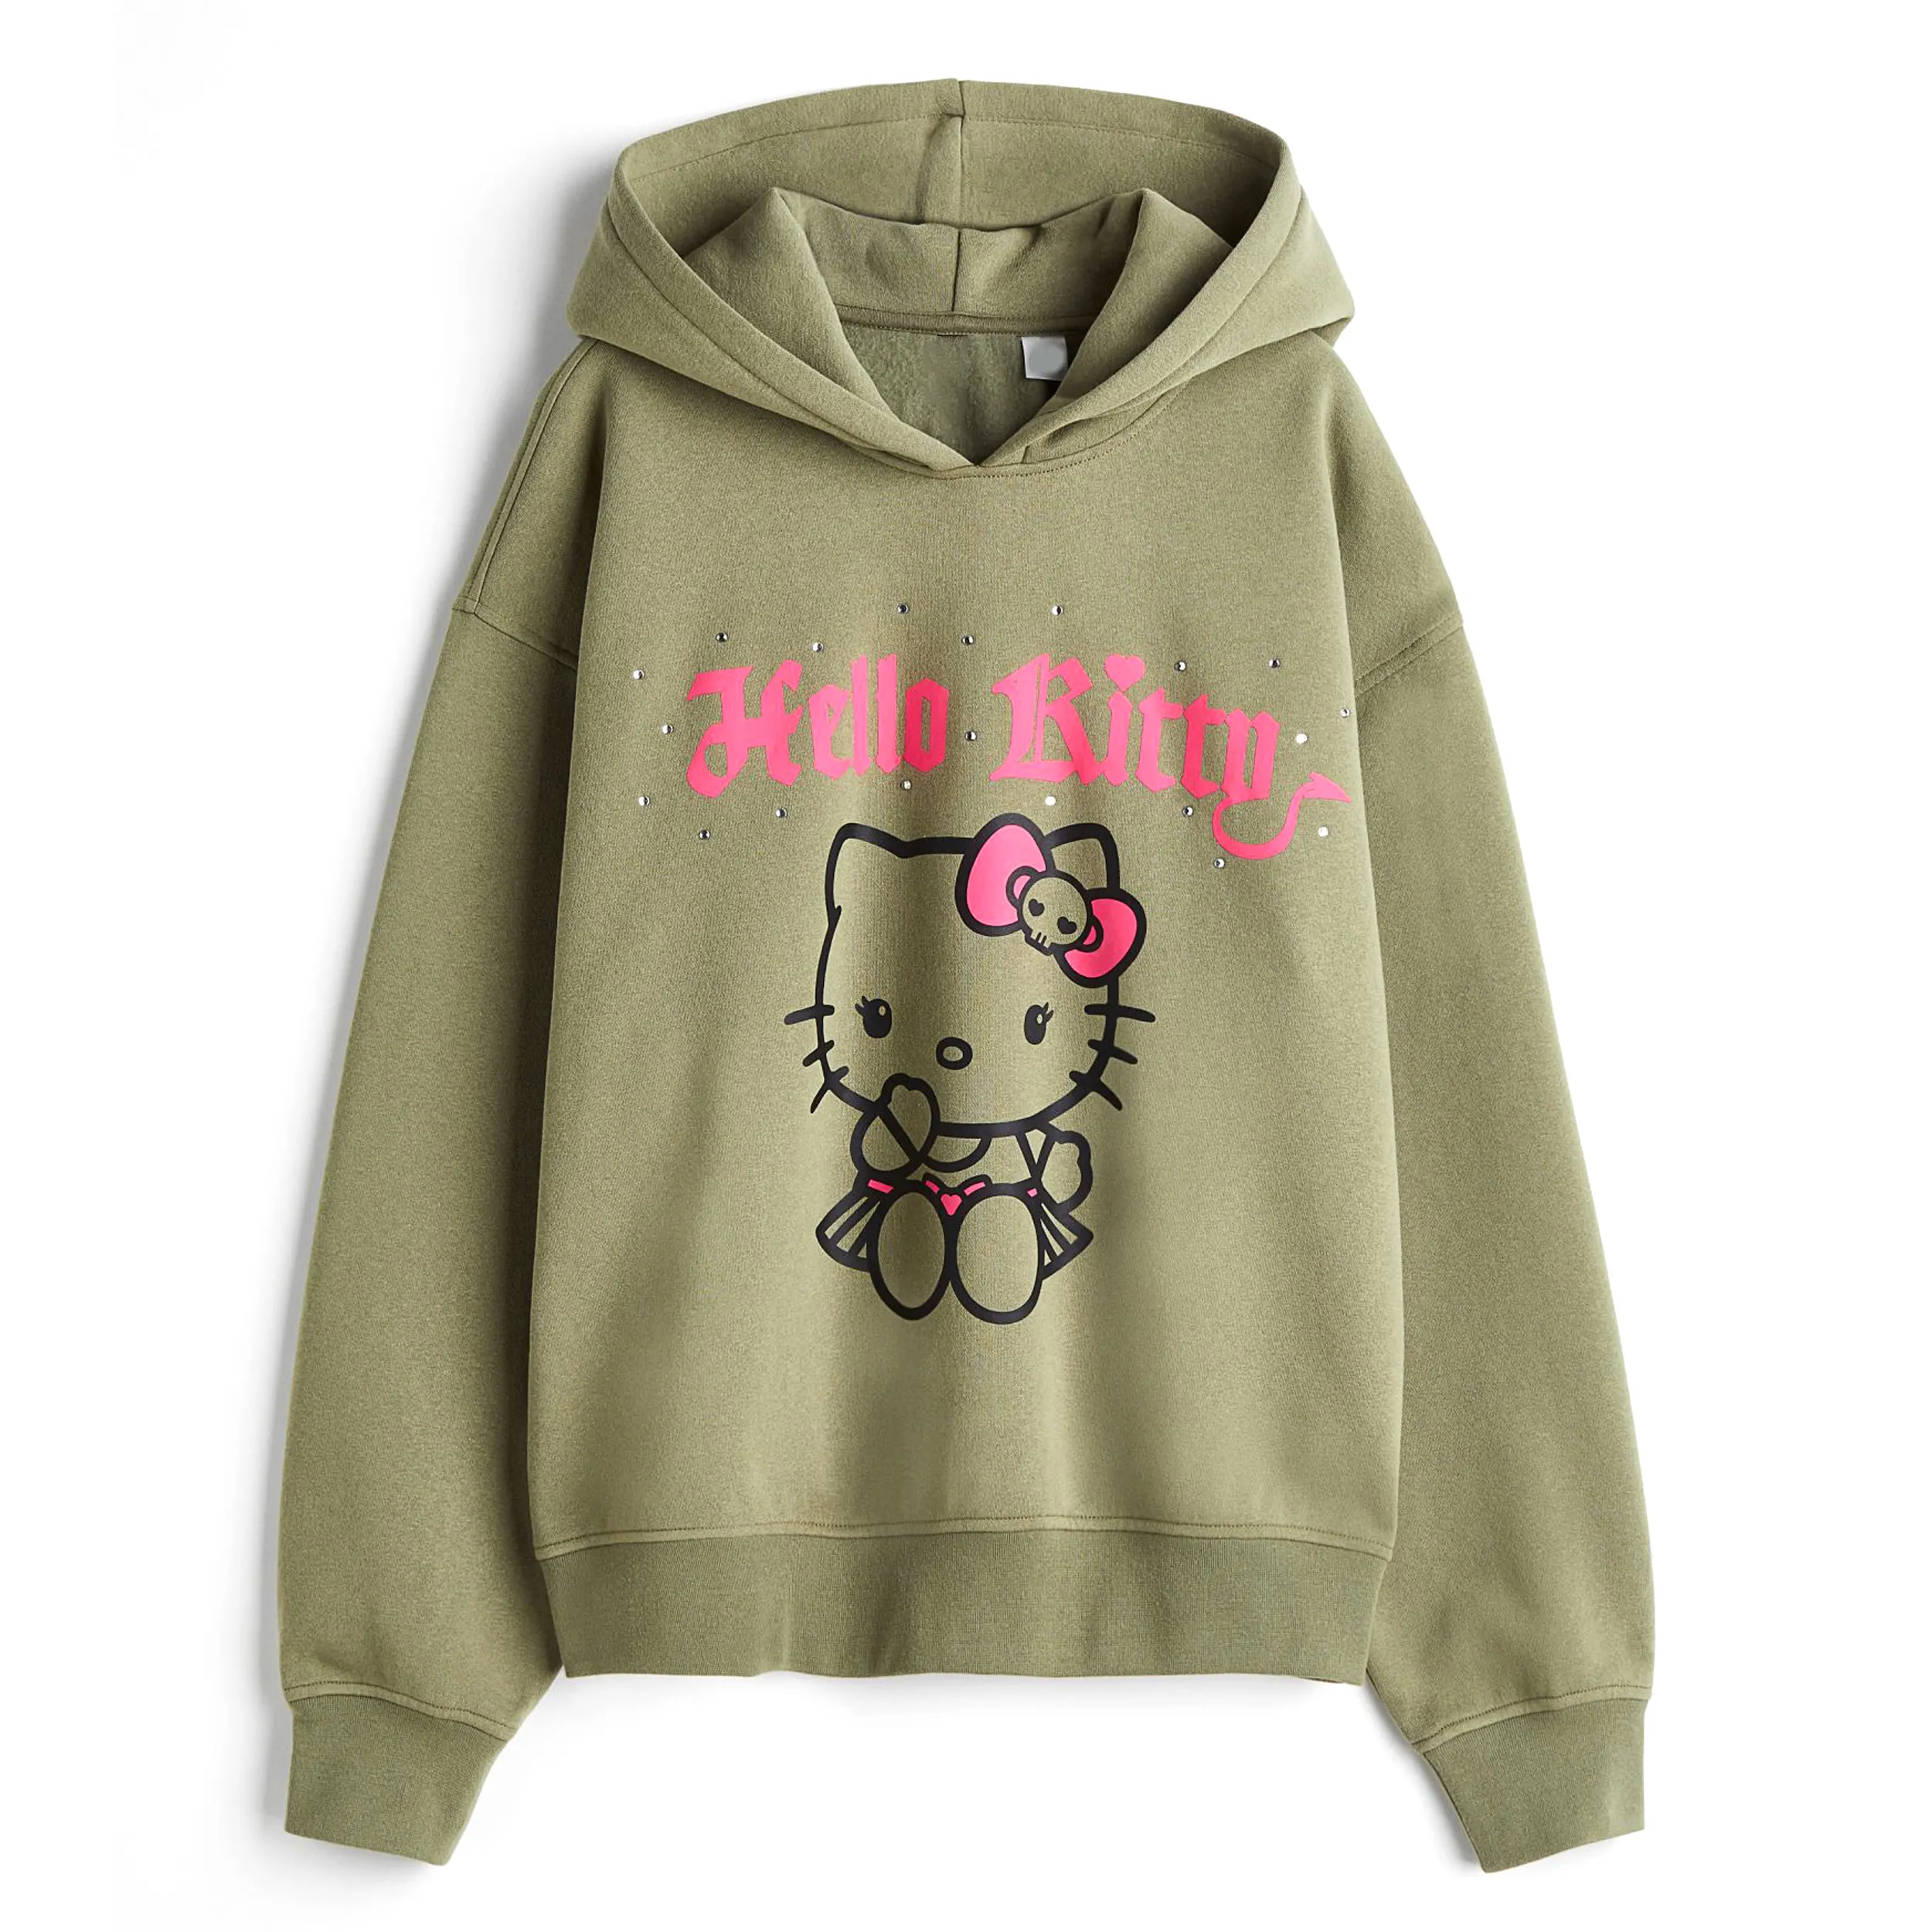 High Quality Khaki green Hello Kitty hoodie in printed sweatshirt fabric with a soft brushed inside long sleeves kangaroo pocket